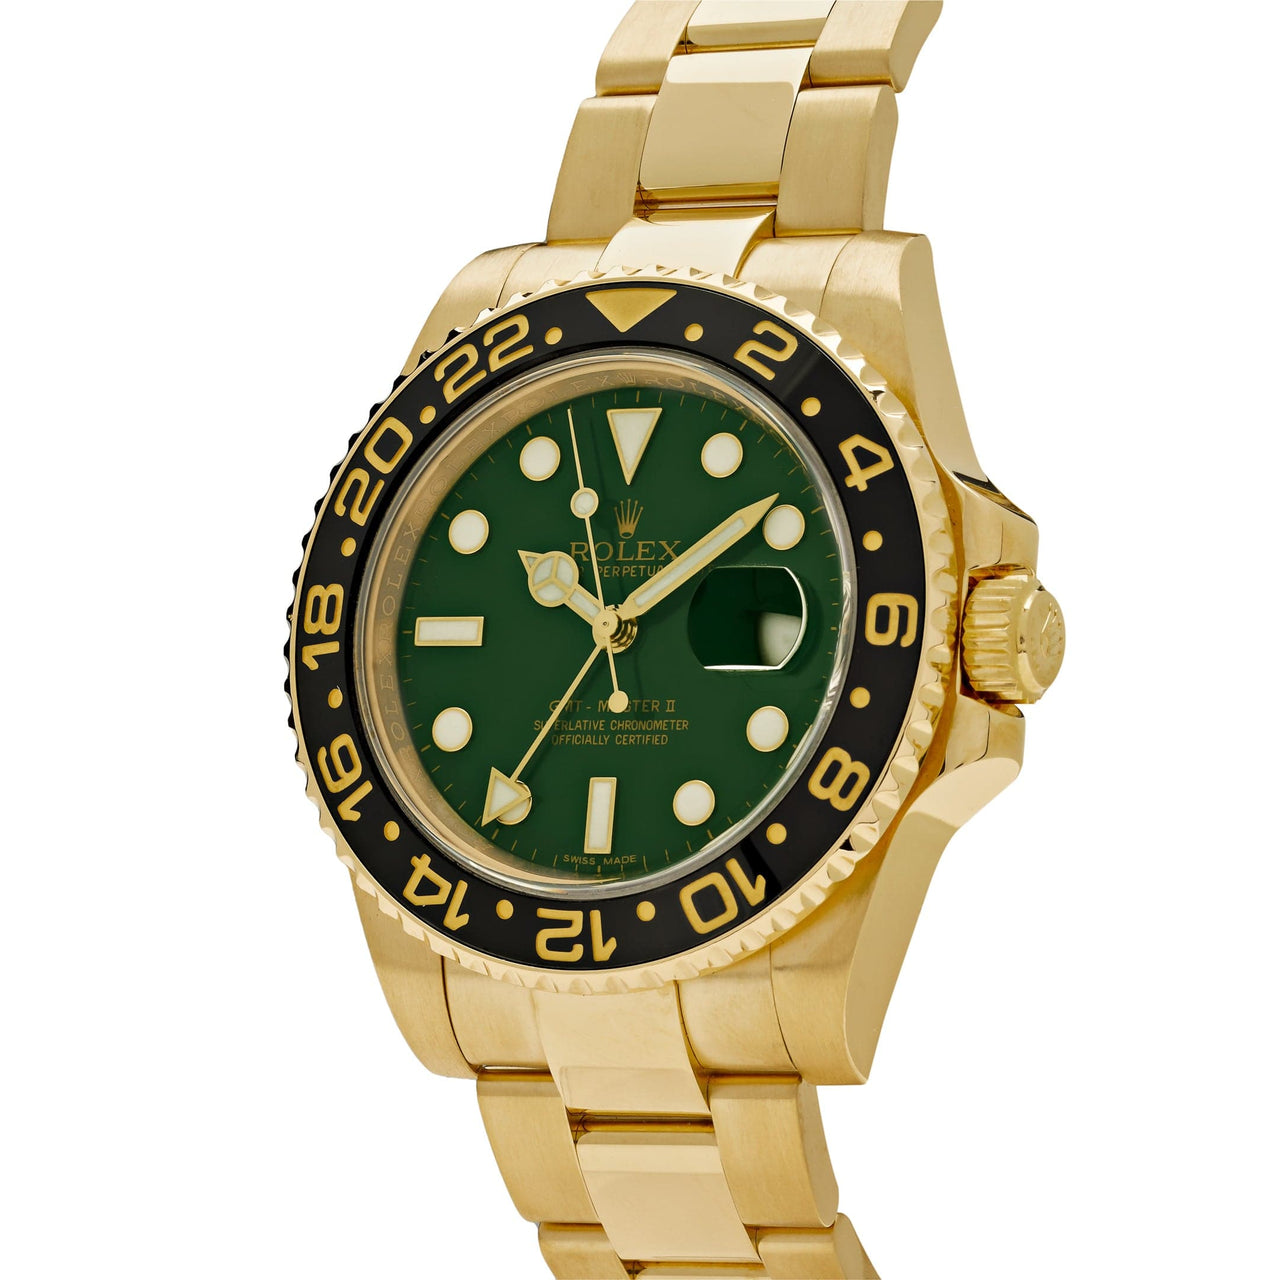 Rolex GMT-Master II Yellow Gold Green Dial Black Bezel 116718 wrist aficionado